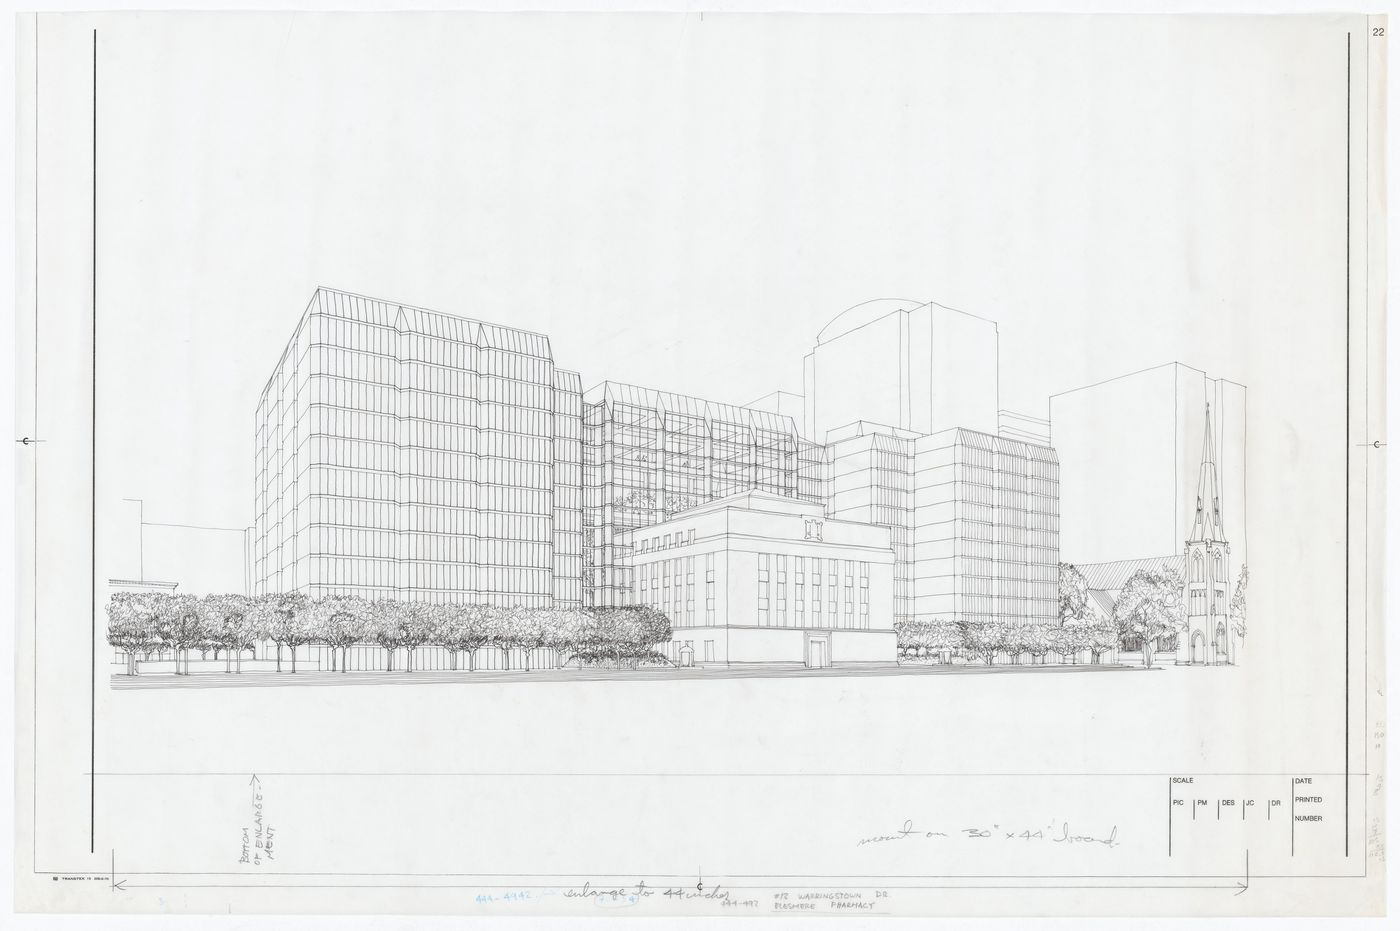 Exterior perspective for Bank of Canada Building, Ottawa, Ontario